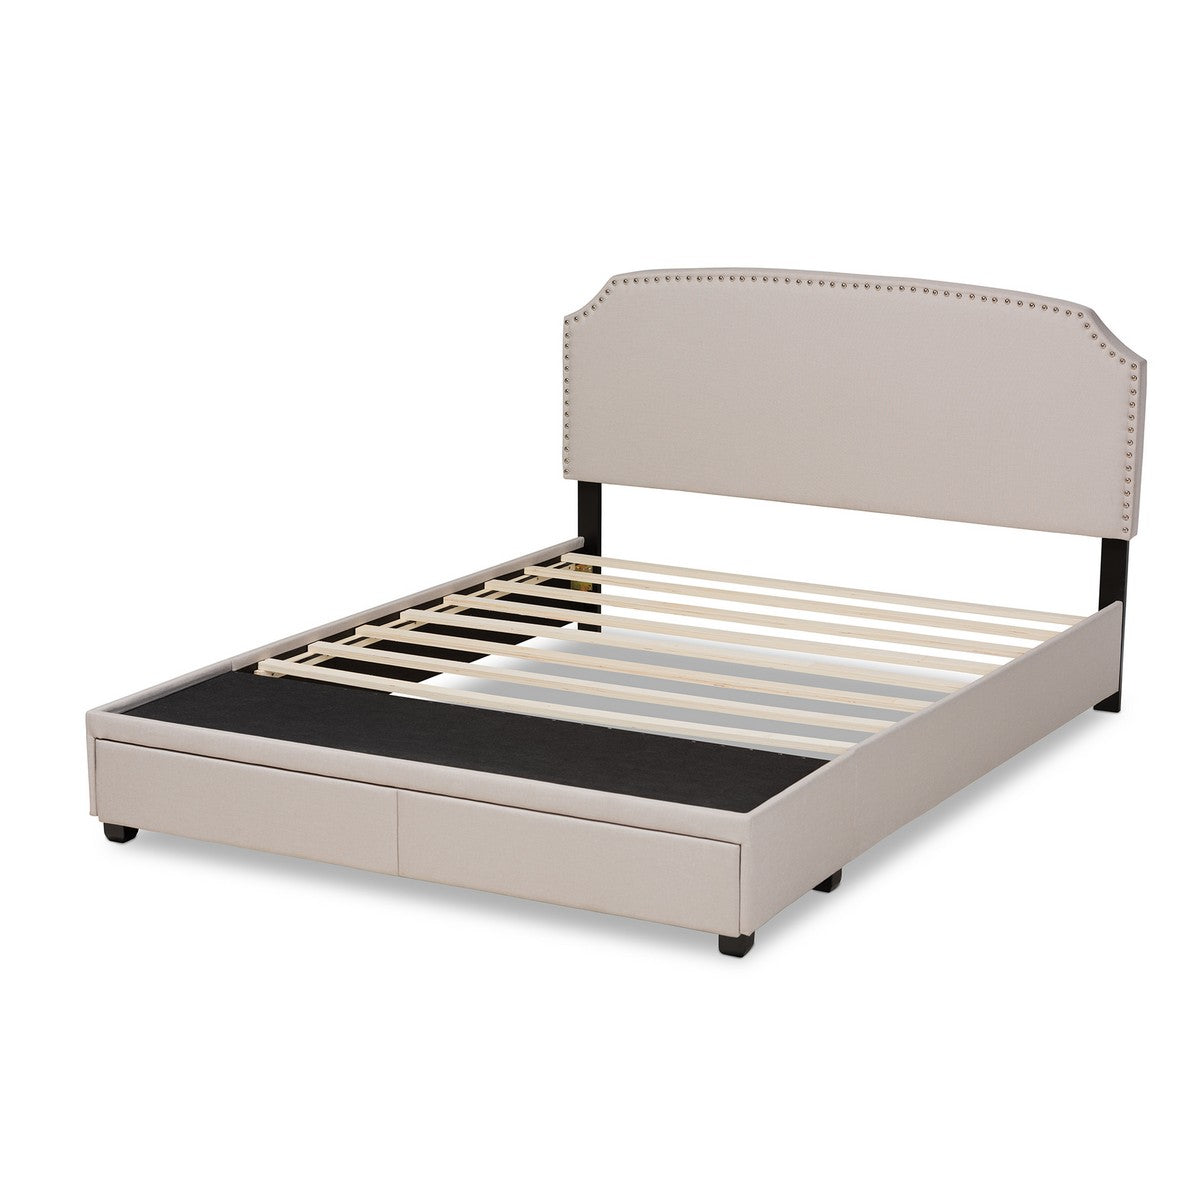 Baxton Studio Larese Beige Fabric Upholstered 2-Drawer King Size Platform Storage Bed